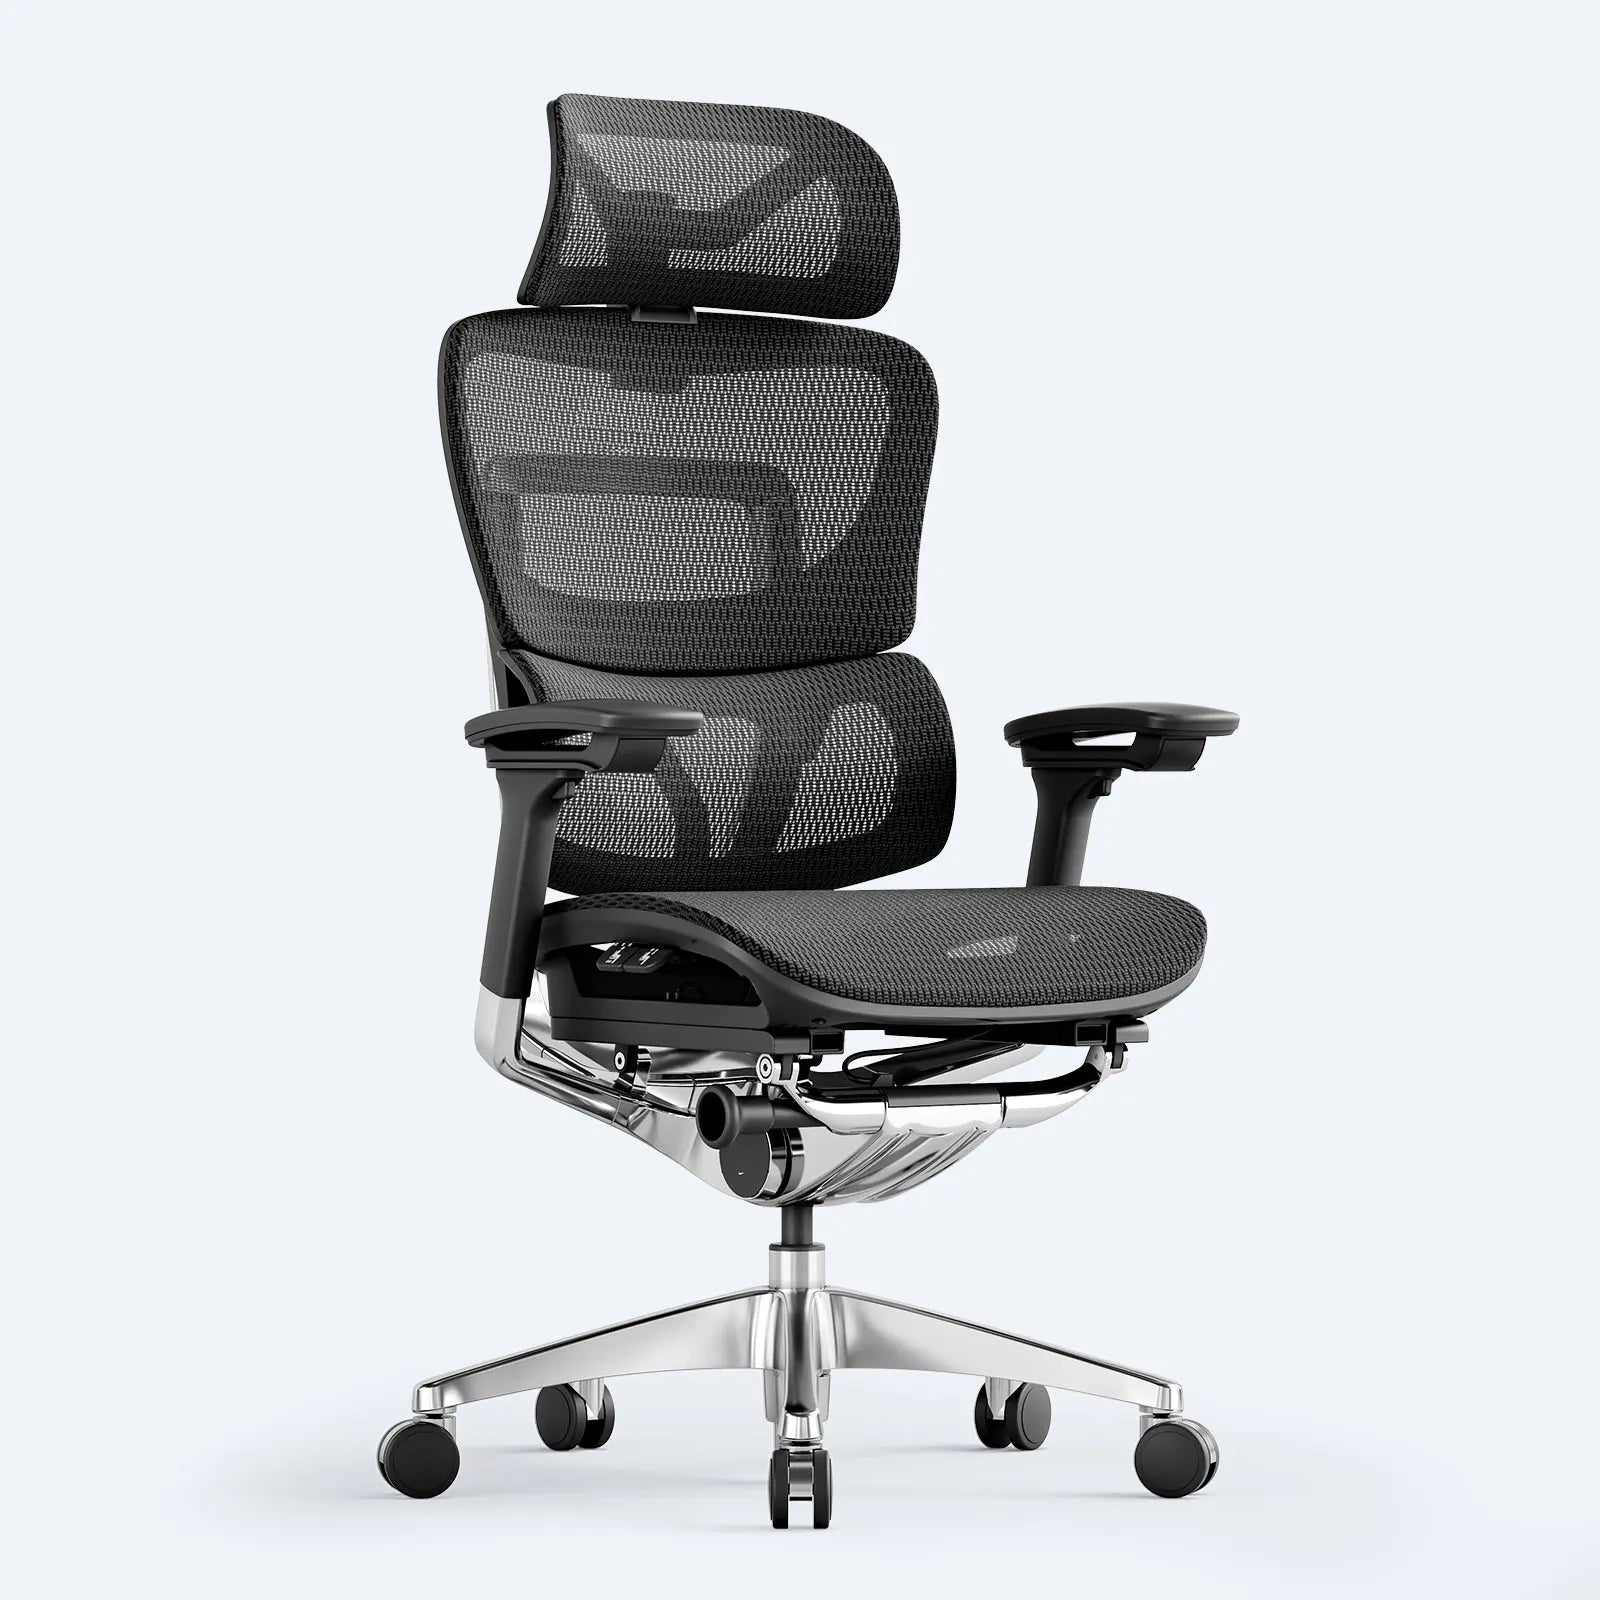 OdinLake Ergo PLUS 743 - Ergonomic Chair With Adjustable Backrest